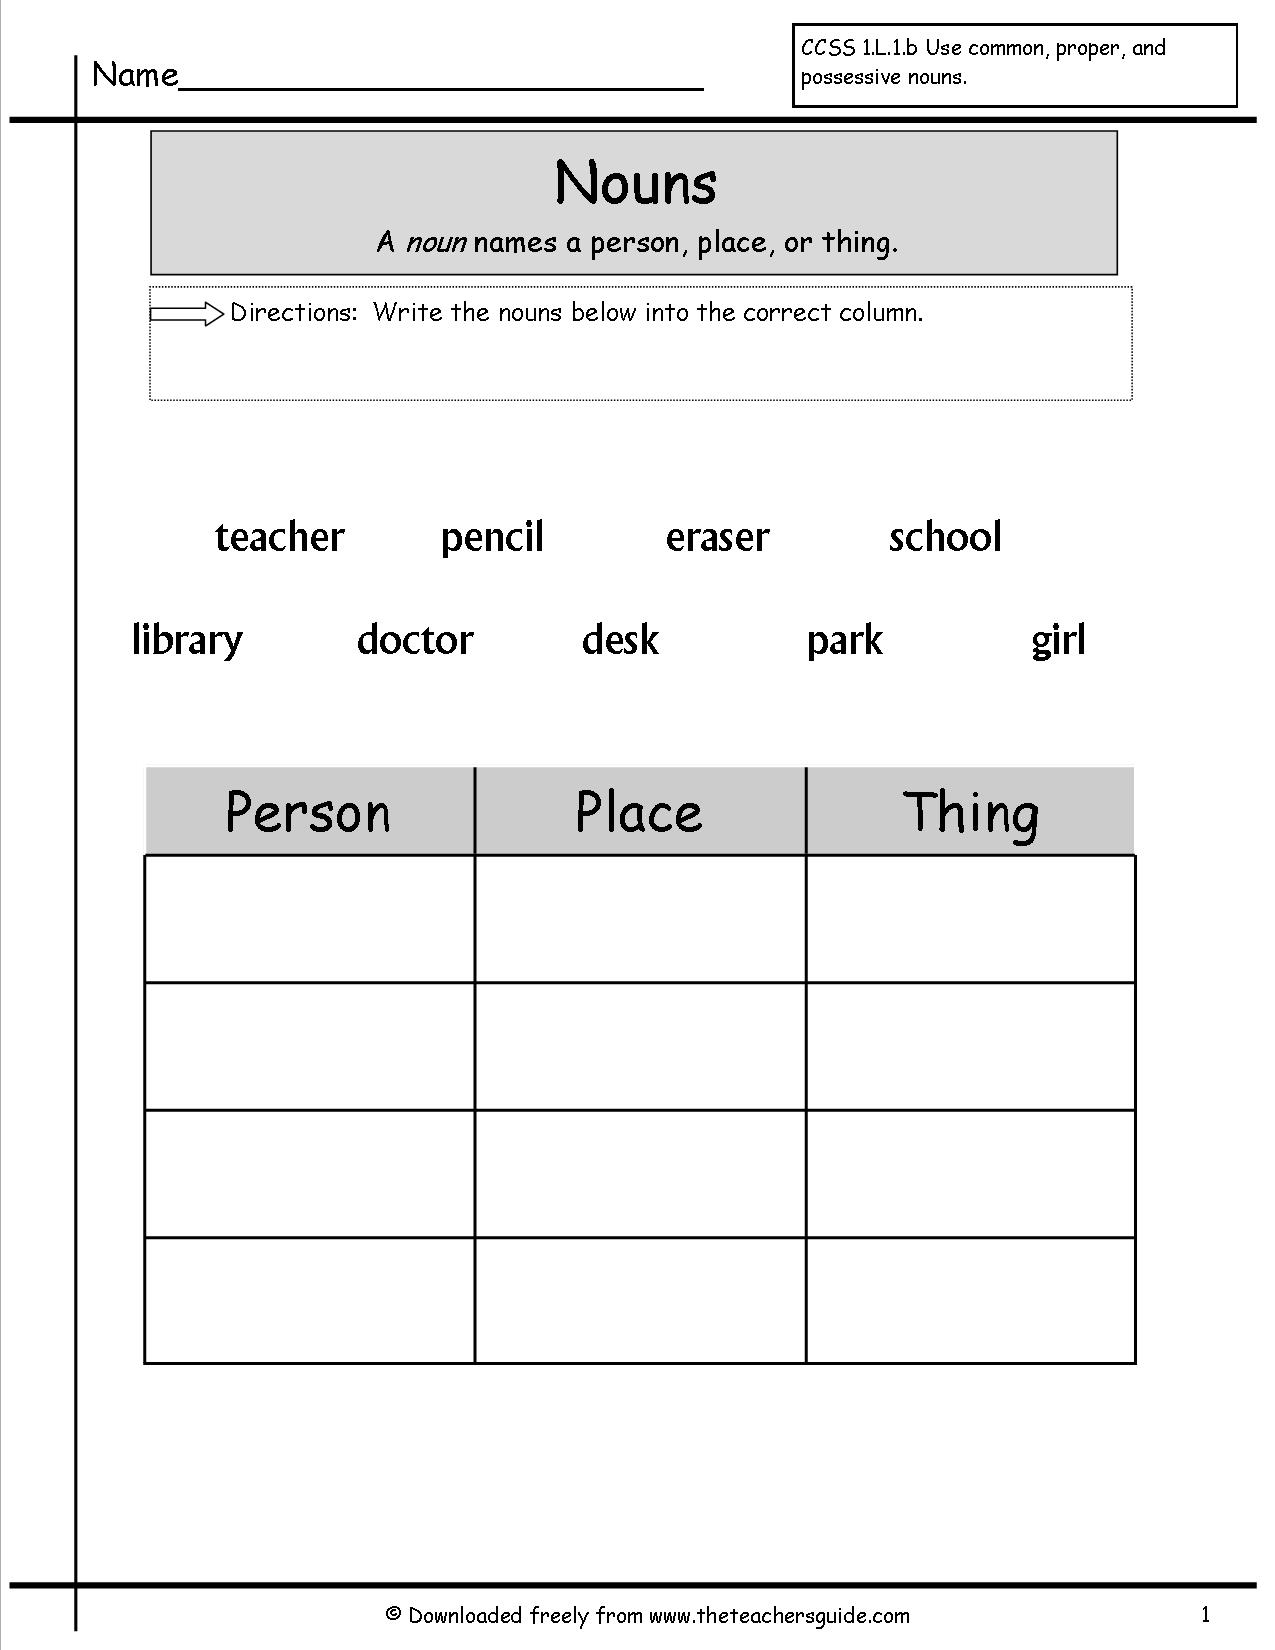 Nouns Worksheet For Class 2nd